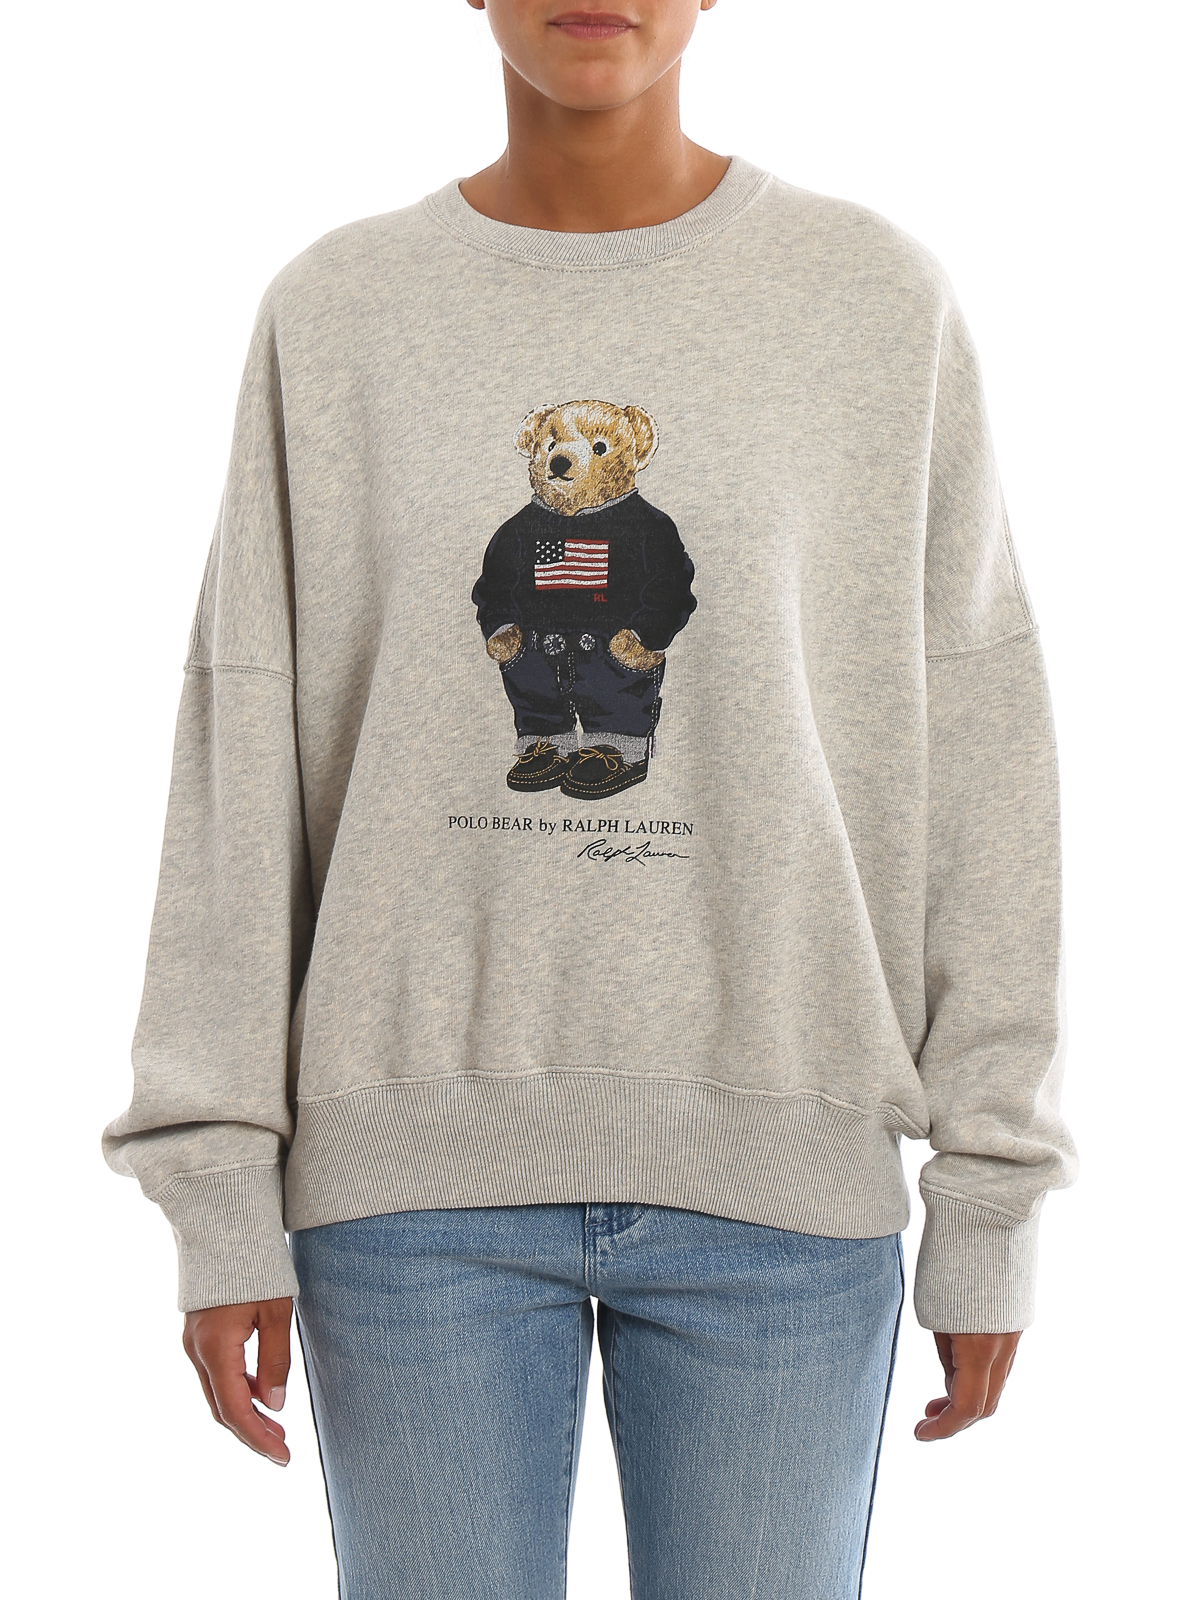 polo ralph lauren polo bear sweater